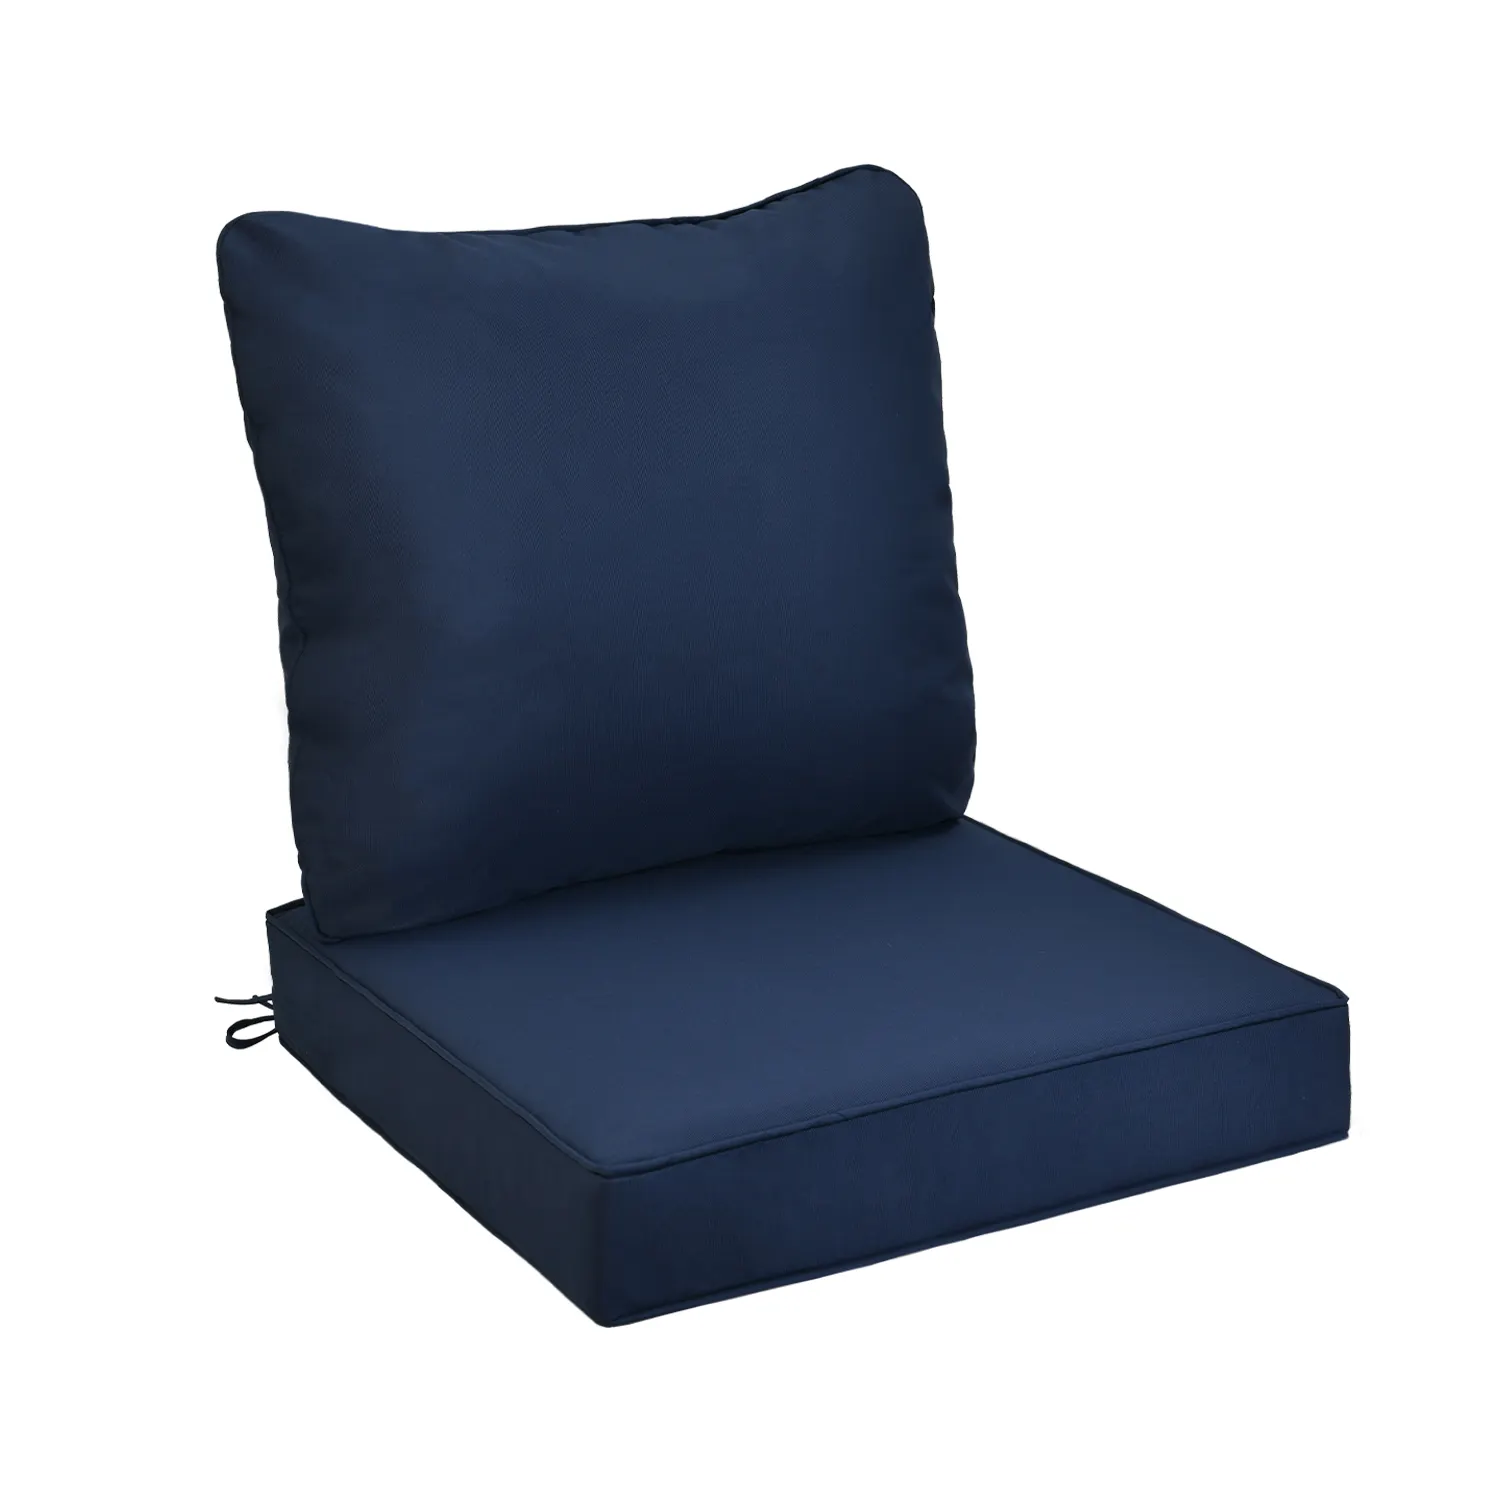 Wholesale customized waterproof polyester garden patio outdoor furniture cushion pillow sofa seat cushion